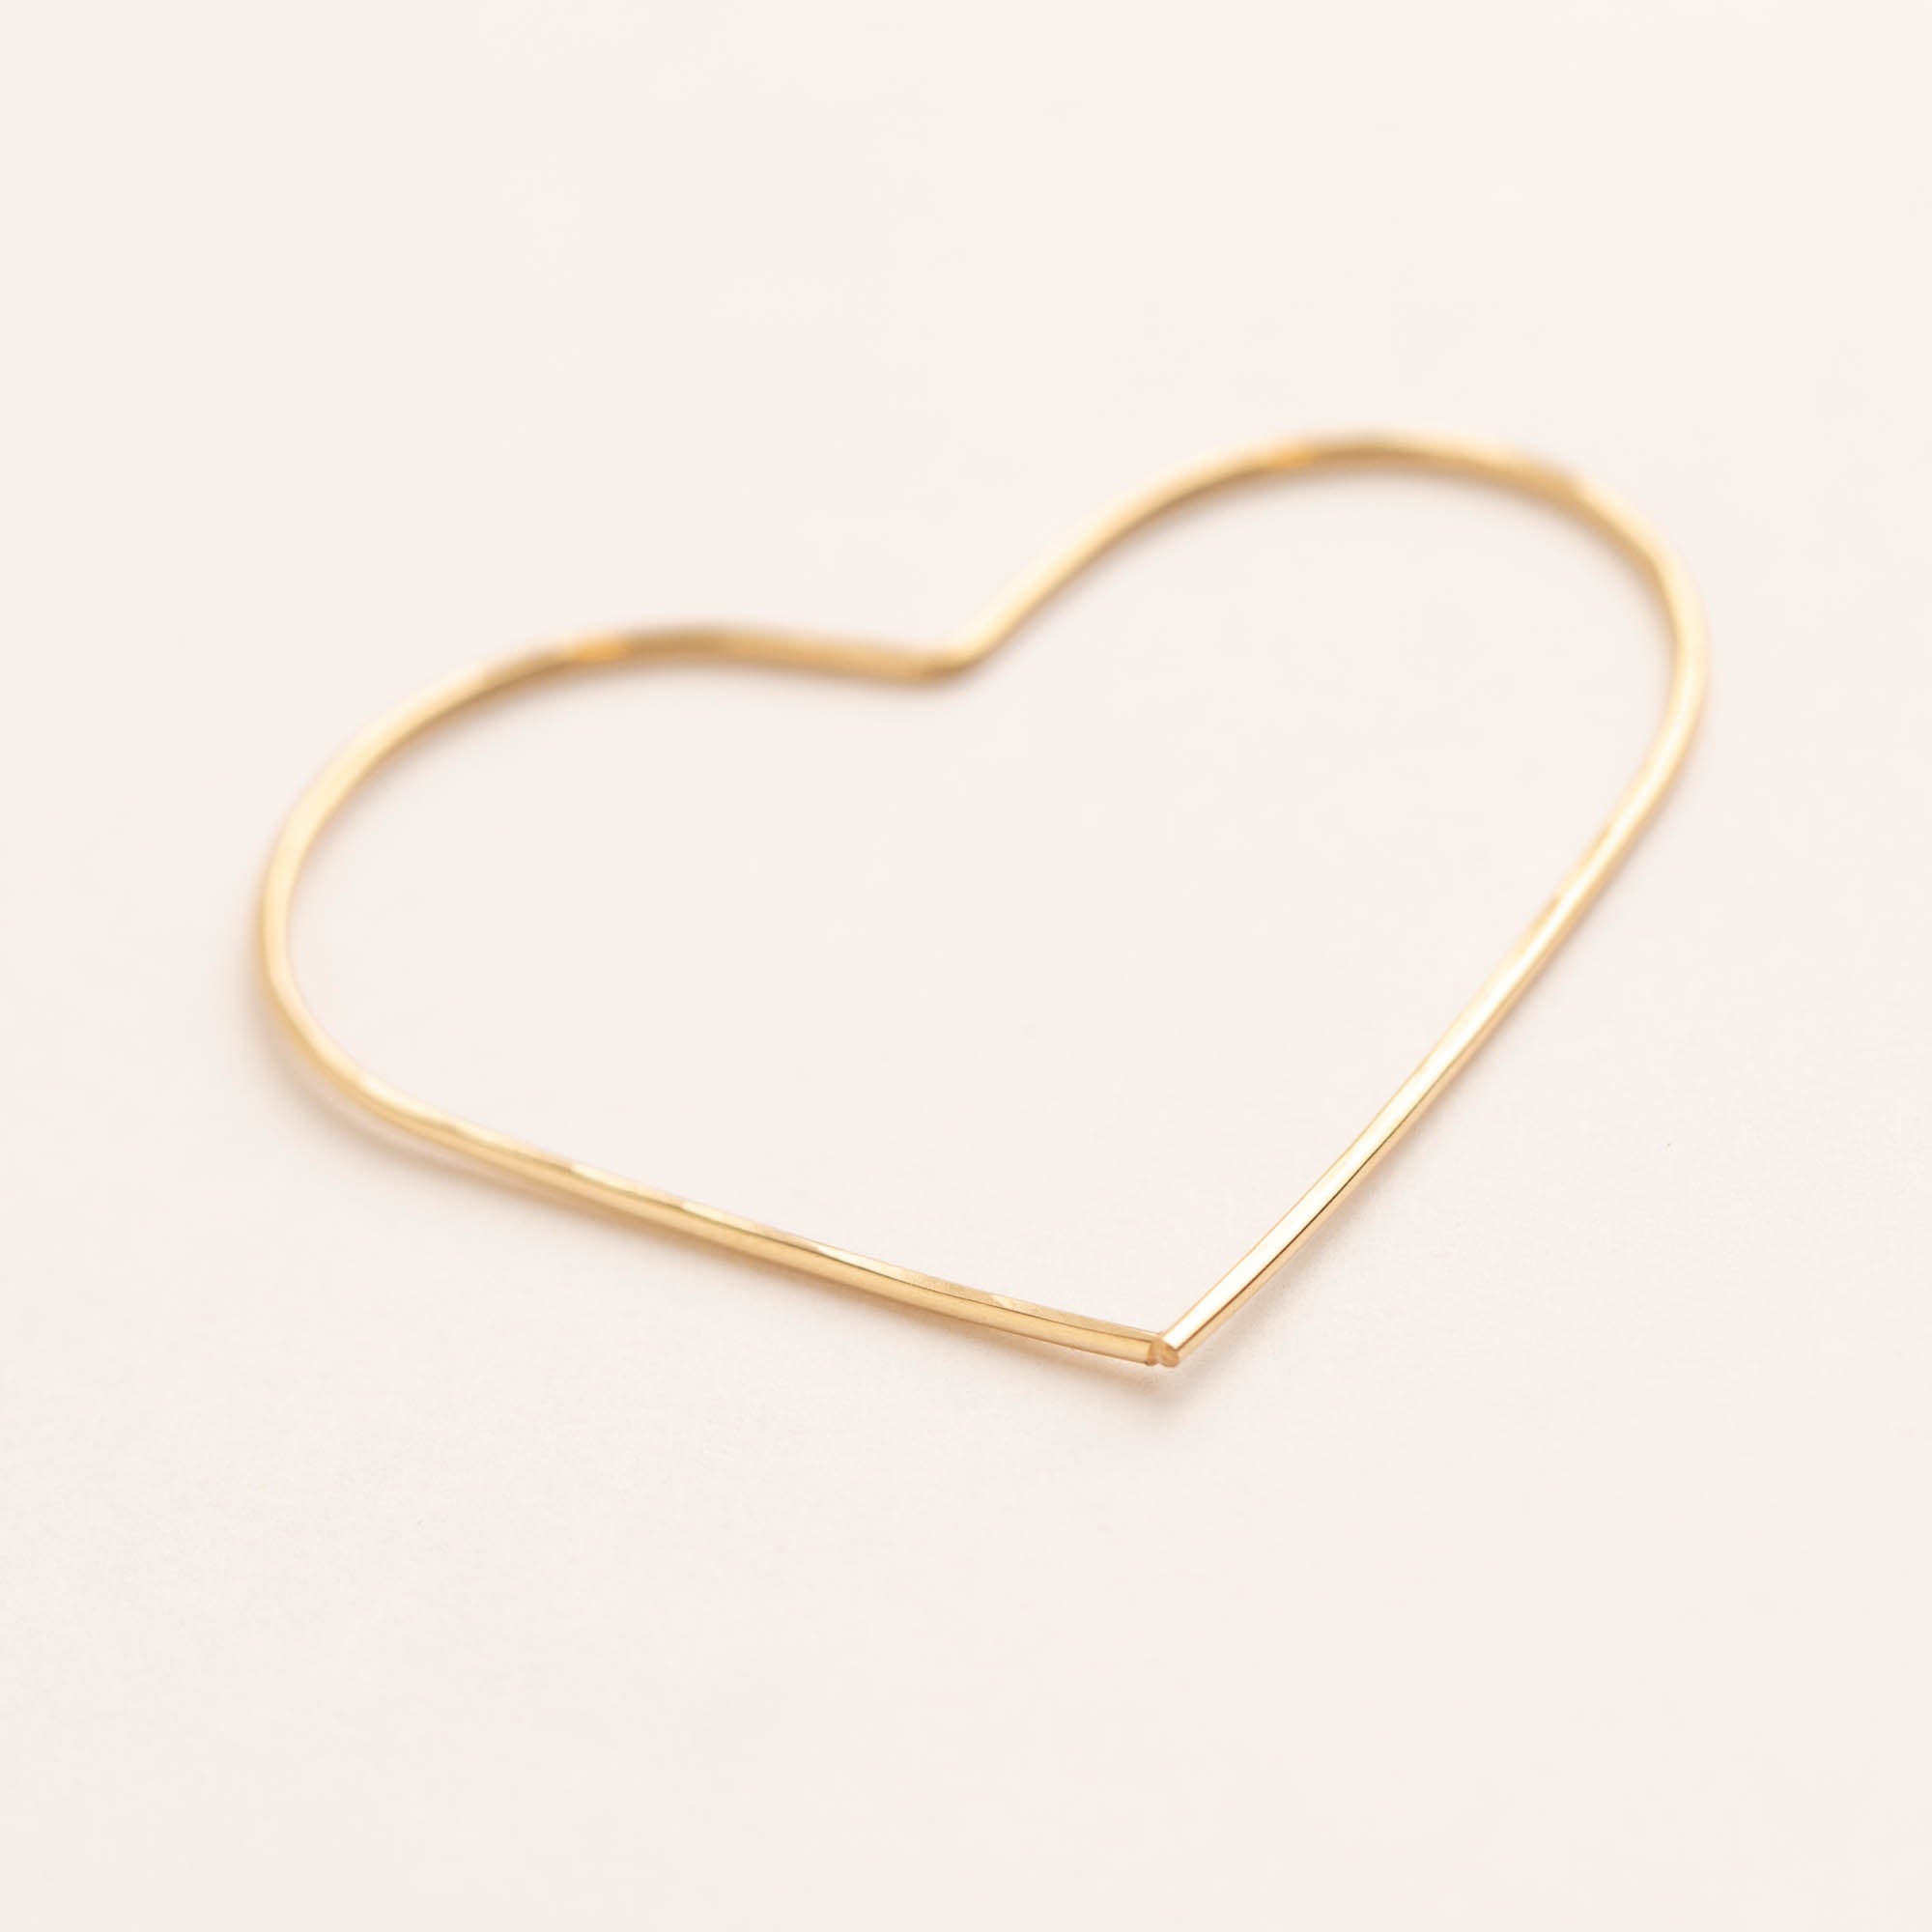 Love Letter Hoop Earrings, 18K Gold Plated Hoops, Valentines Day Earrings, Dainty Clay Jewelry, Canada Handmade